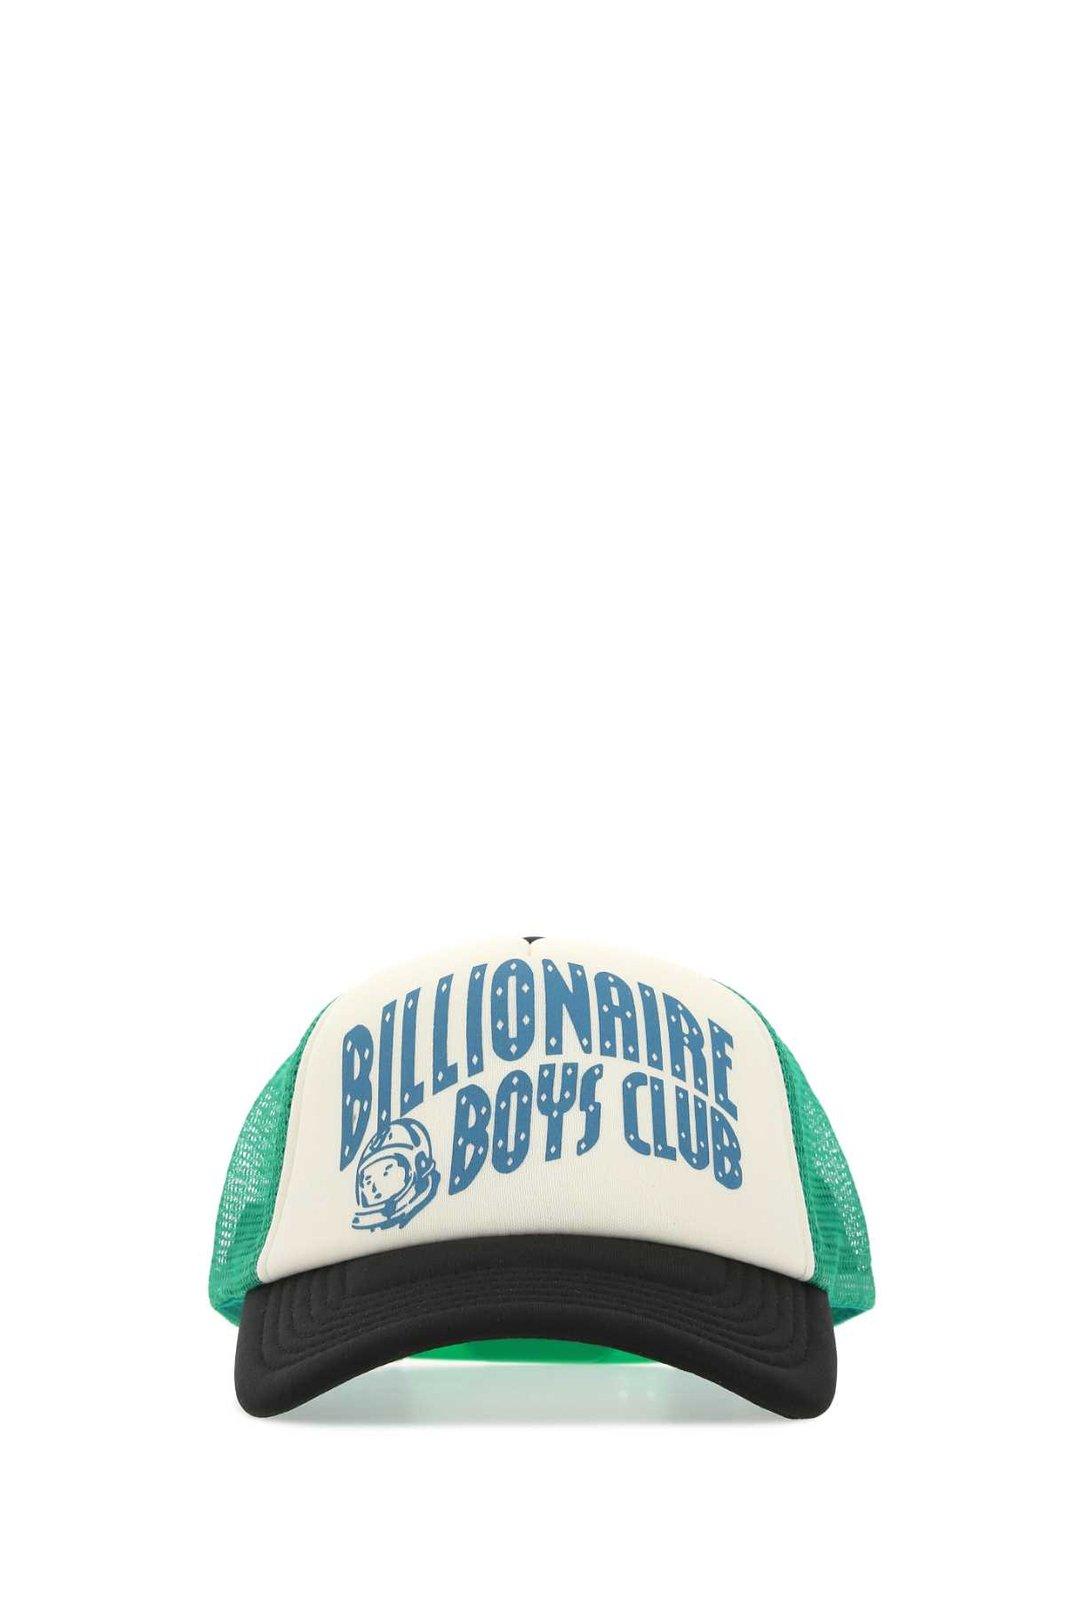 Billionaire Boys Club Logo Printed Mesh Trucker Cap